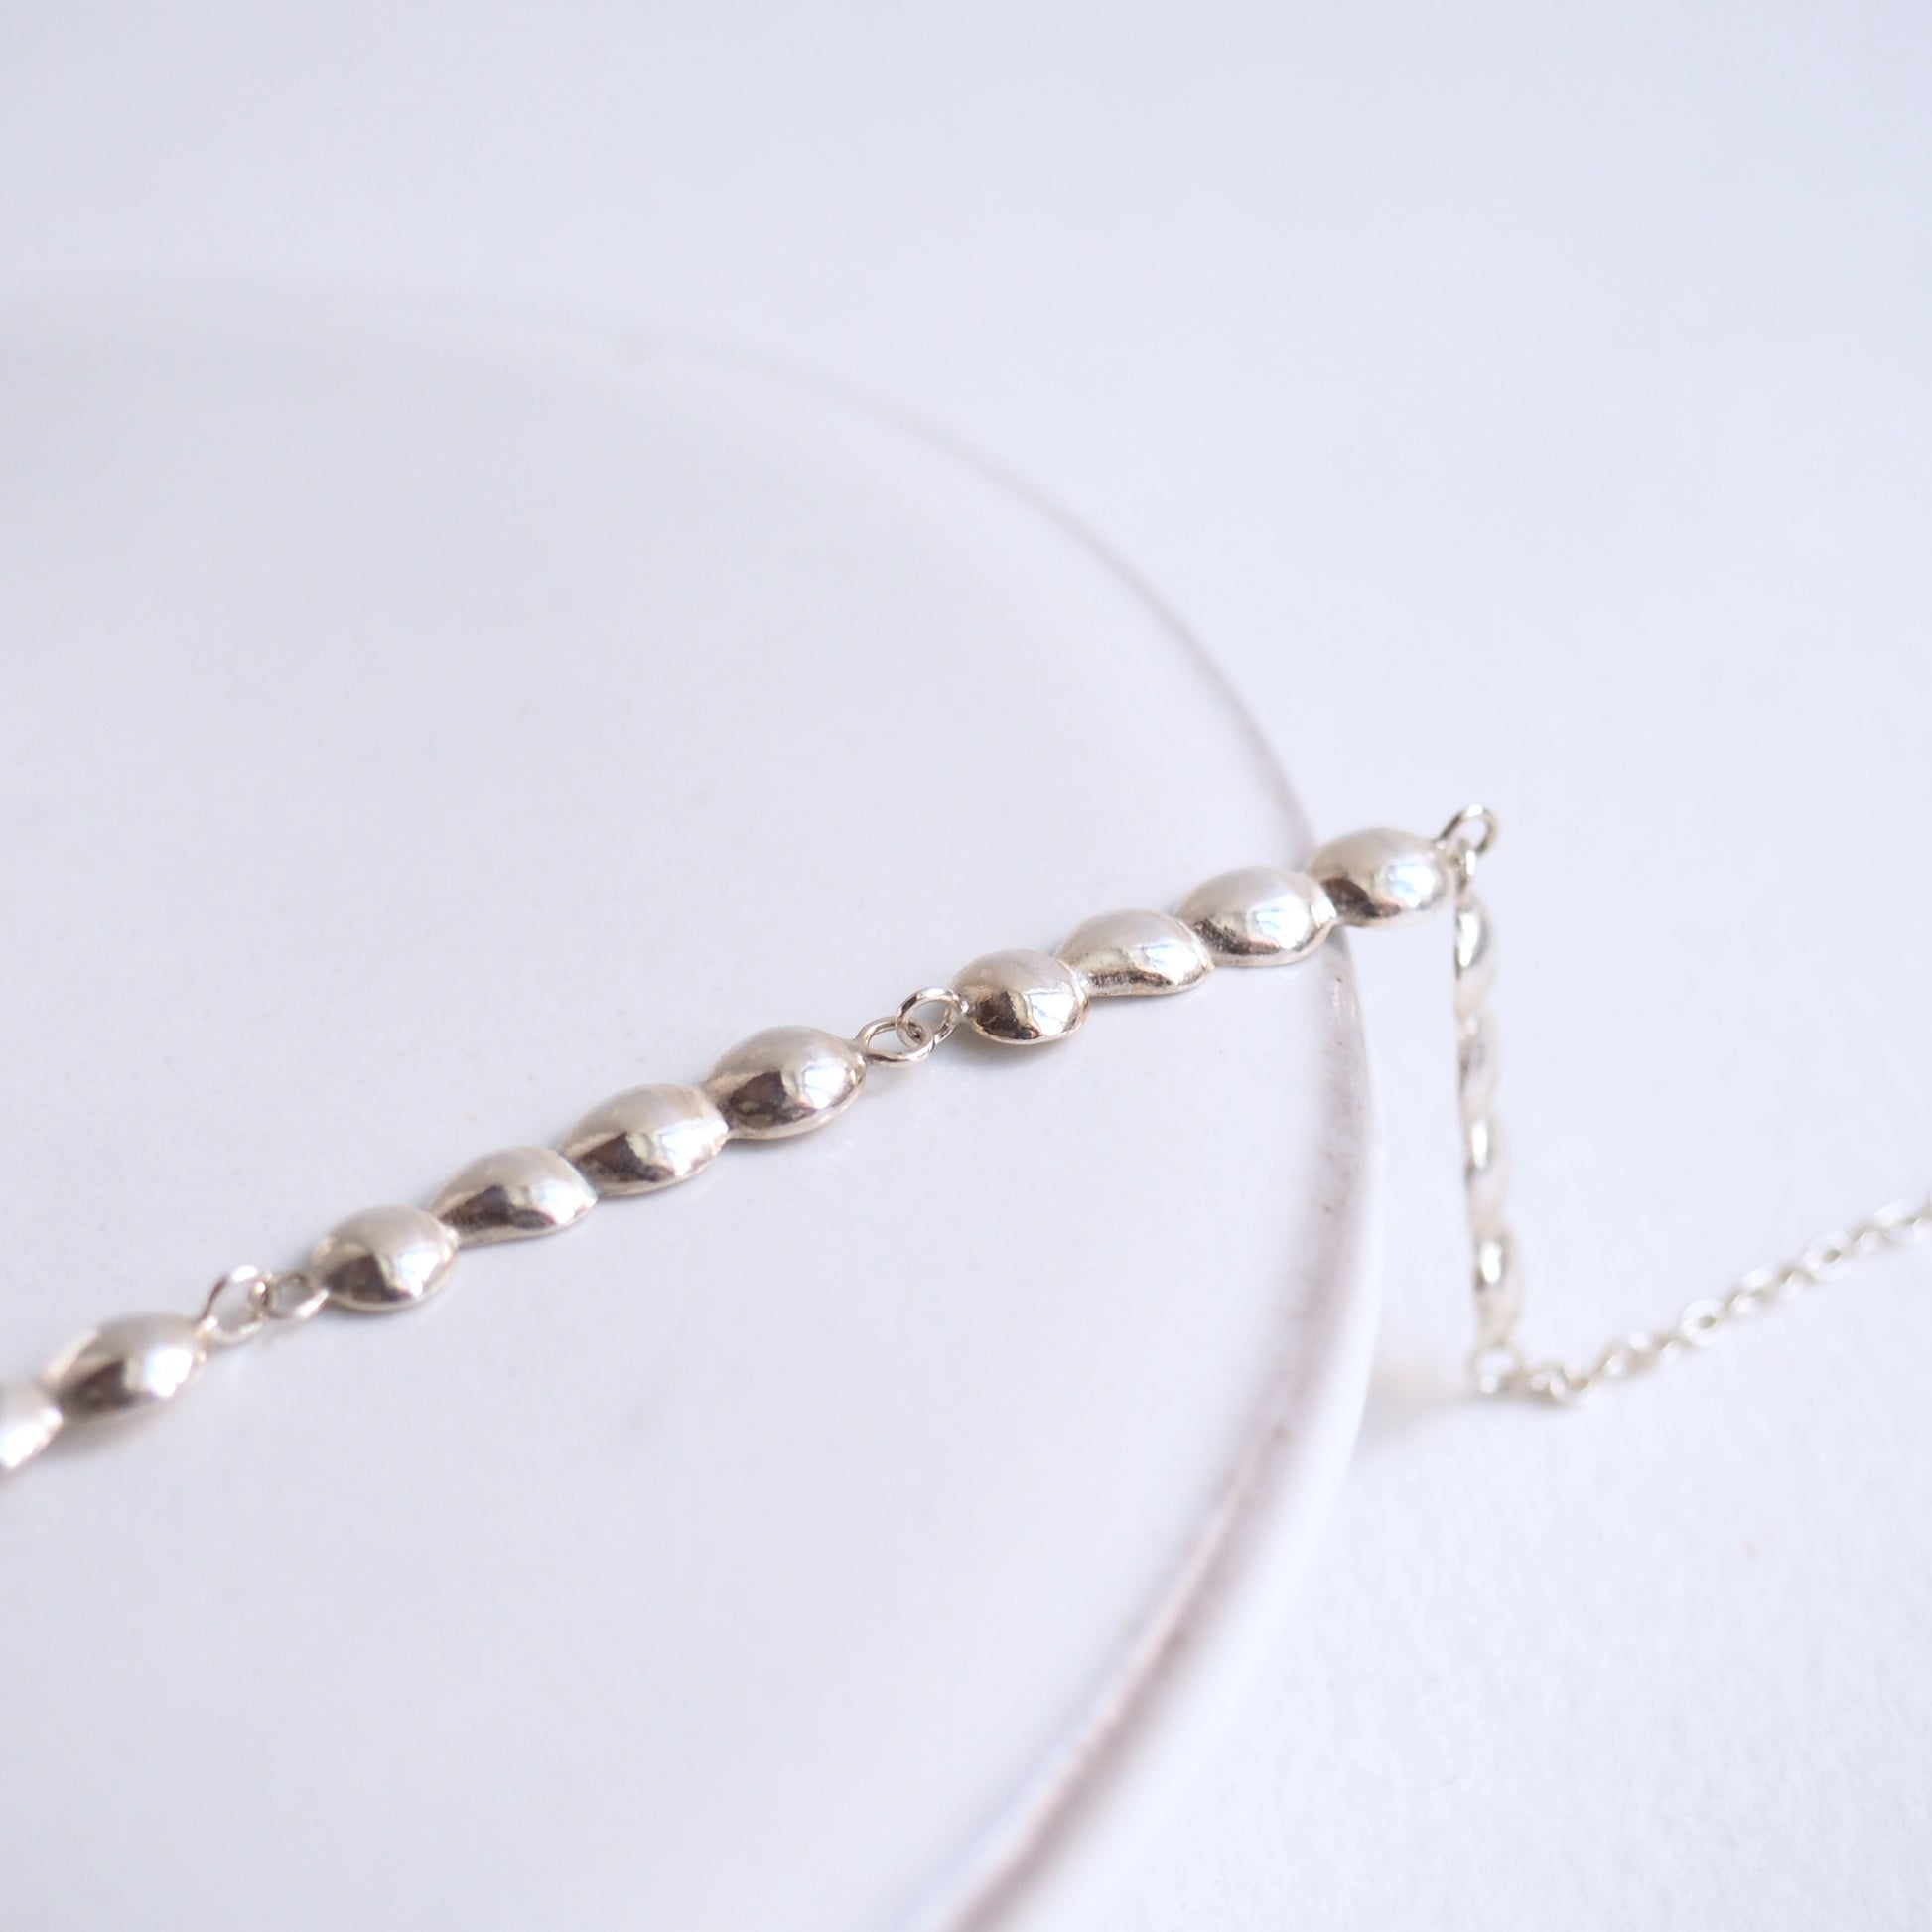 Necklace Silver Jewelry handcrafted handmade fashion bespoke custom design